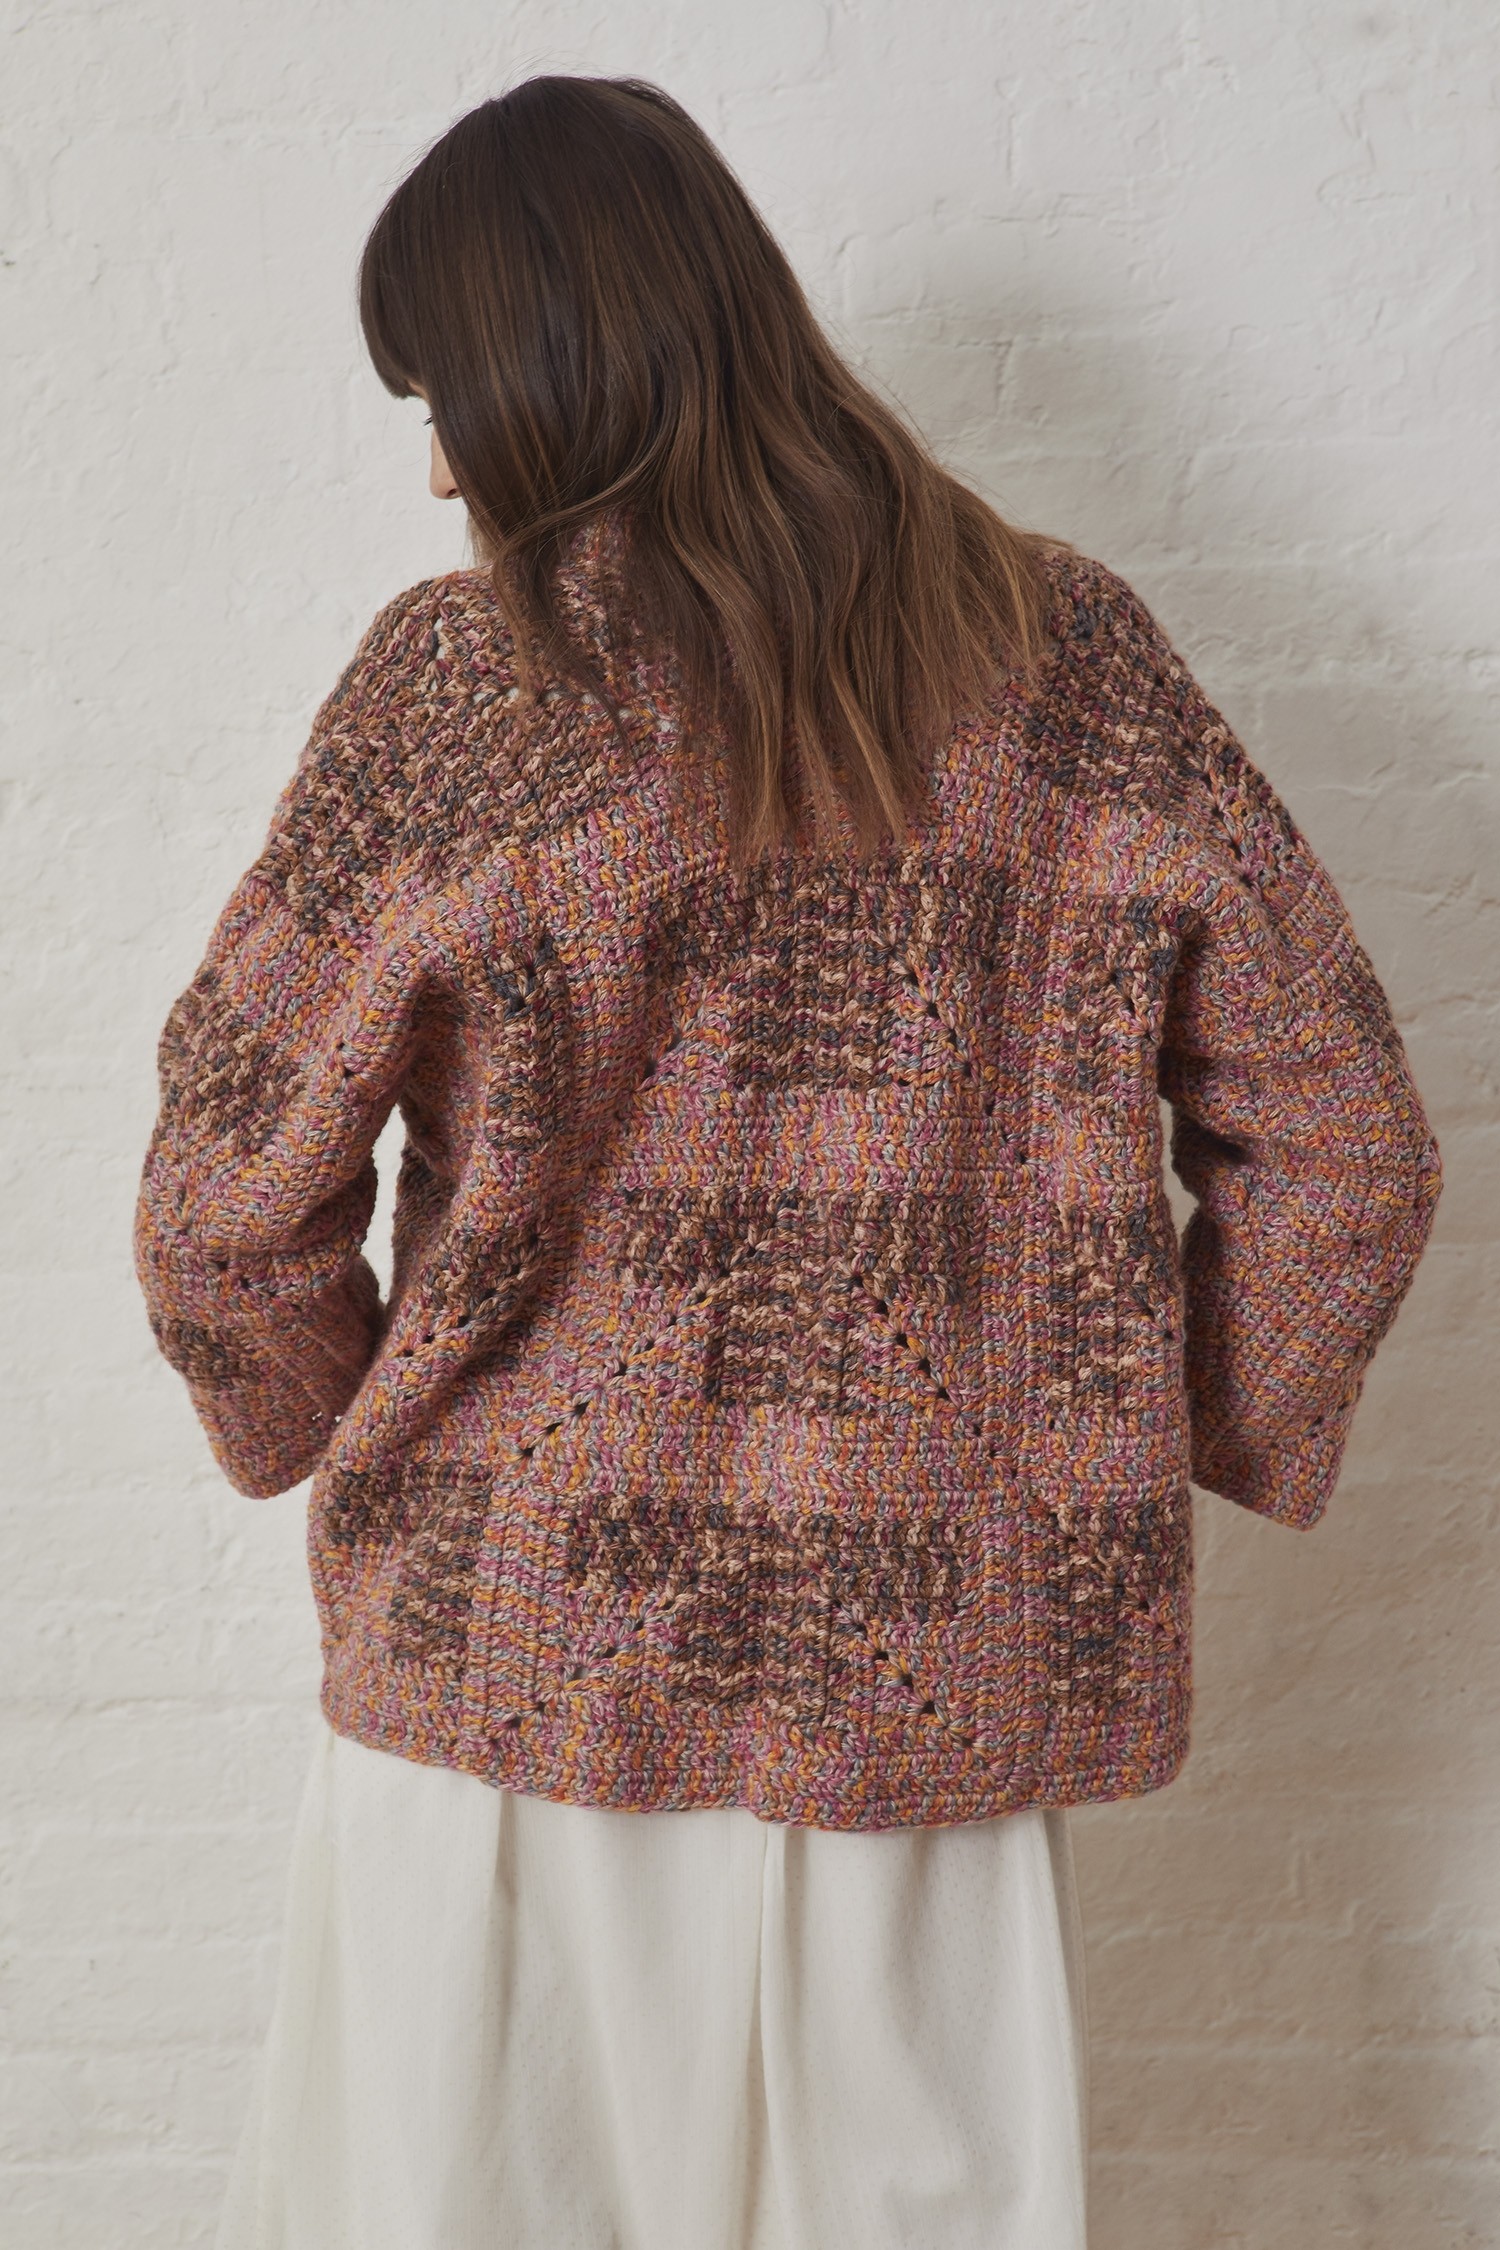 Lion Brand Comfy Cotton Blend & Flikka Yarns Crochet Pattern